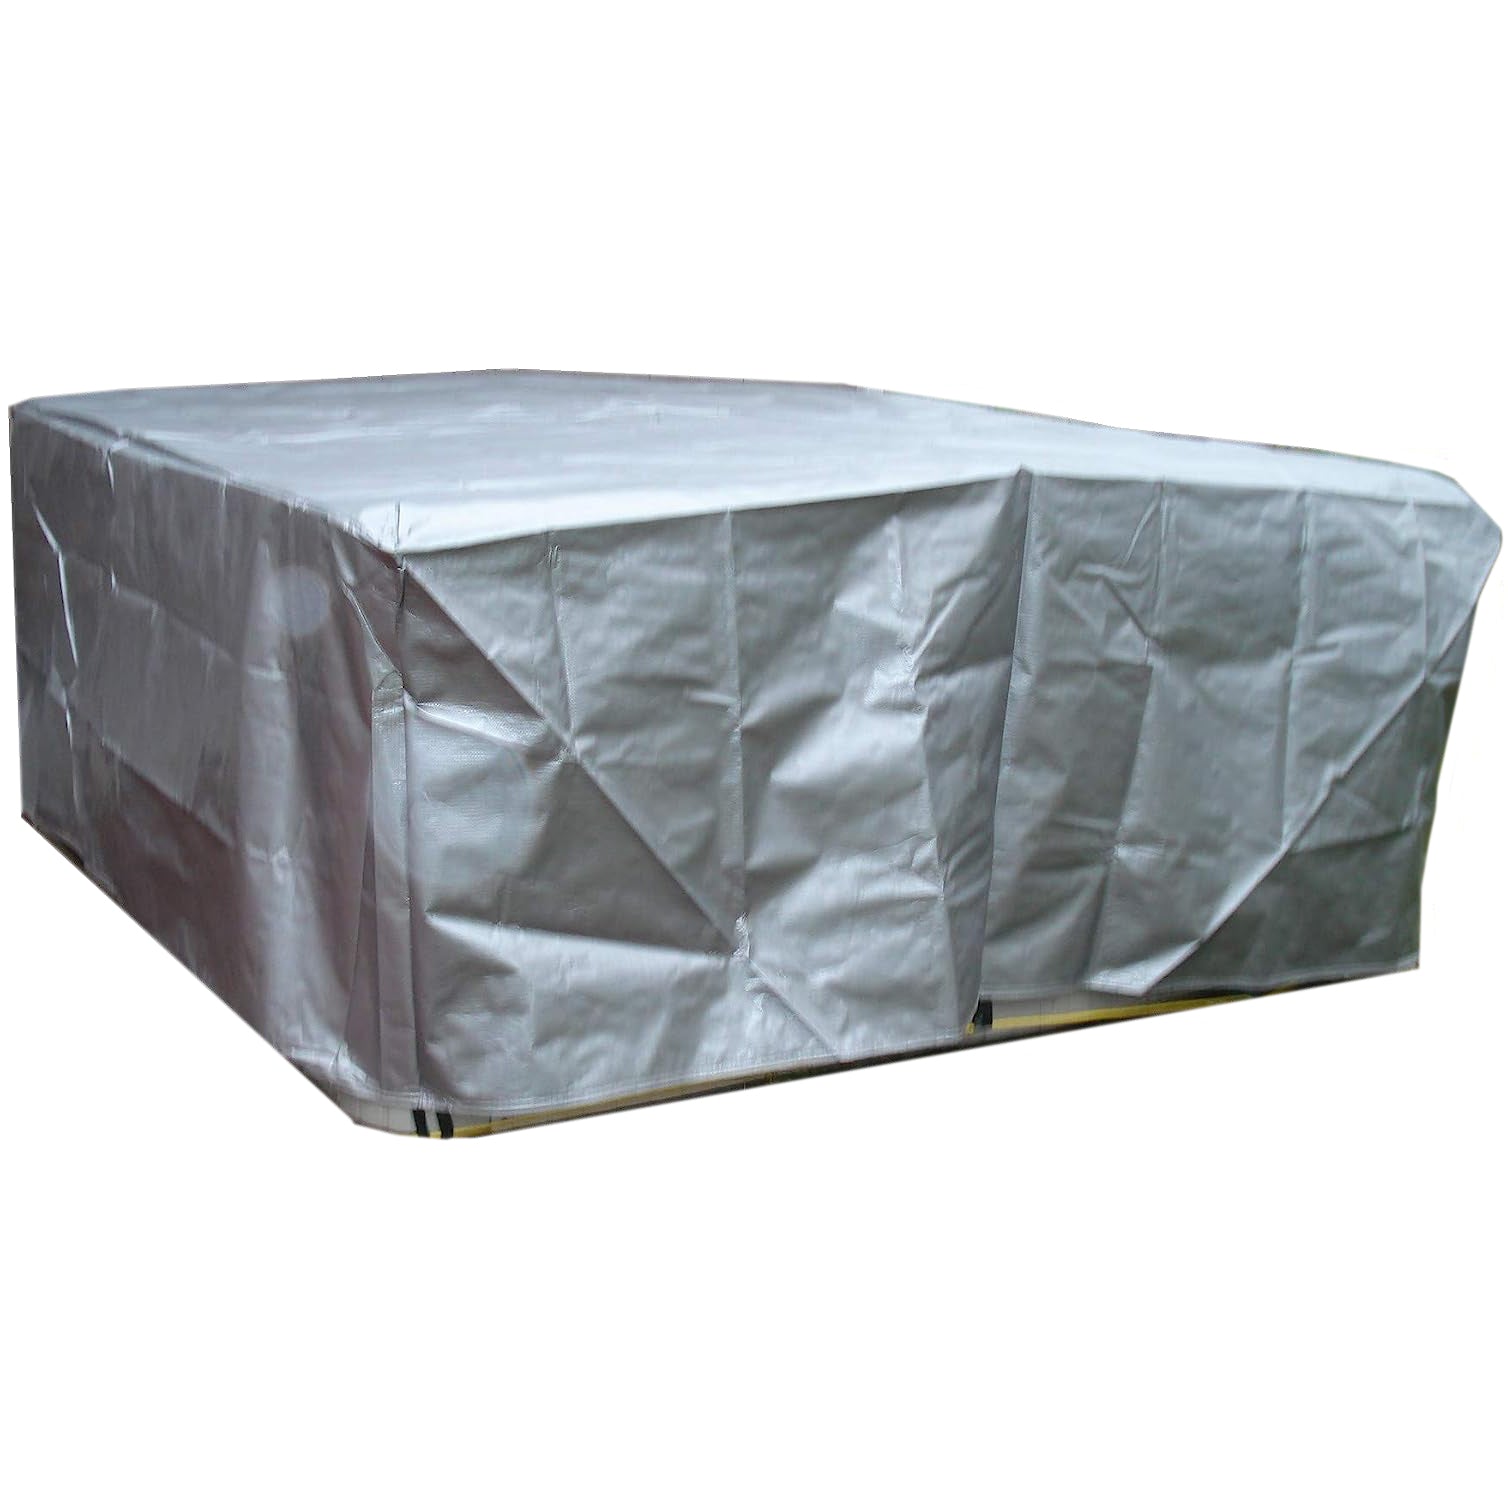 Spa Guard Hot Tub Cover Cap Protector - Size: 7' x7'x 36" - Color: Silver